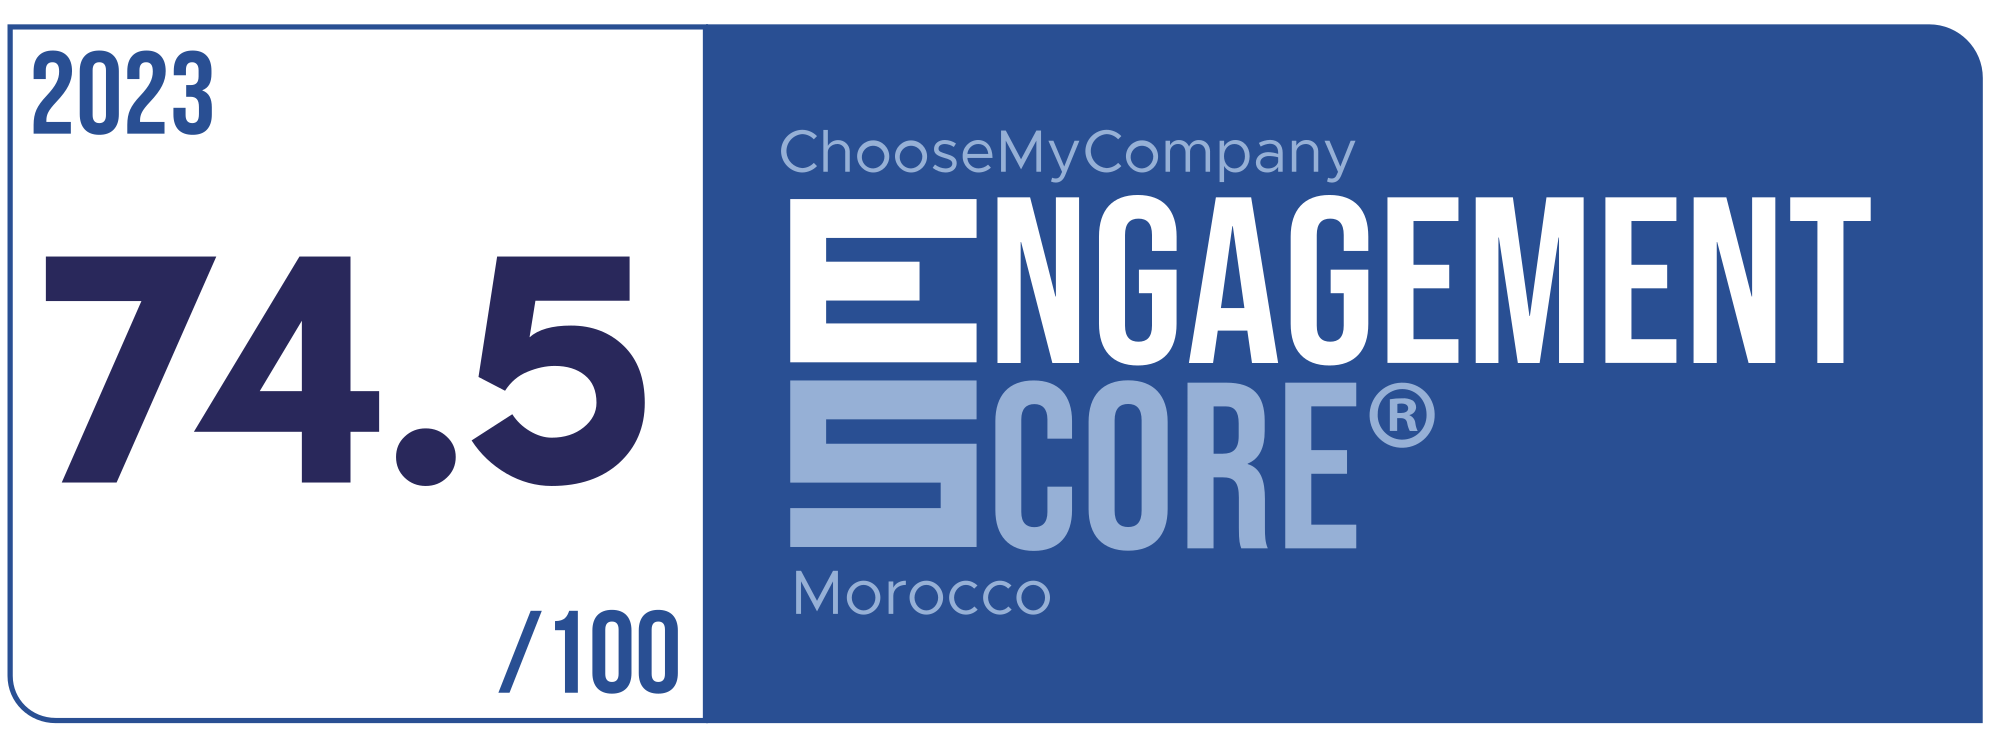 Label Engagement Score 2023 Morocco